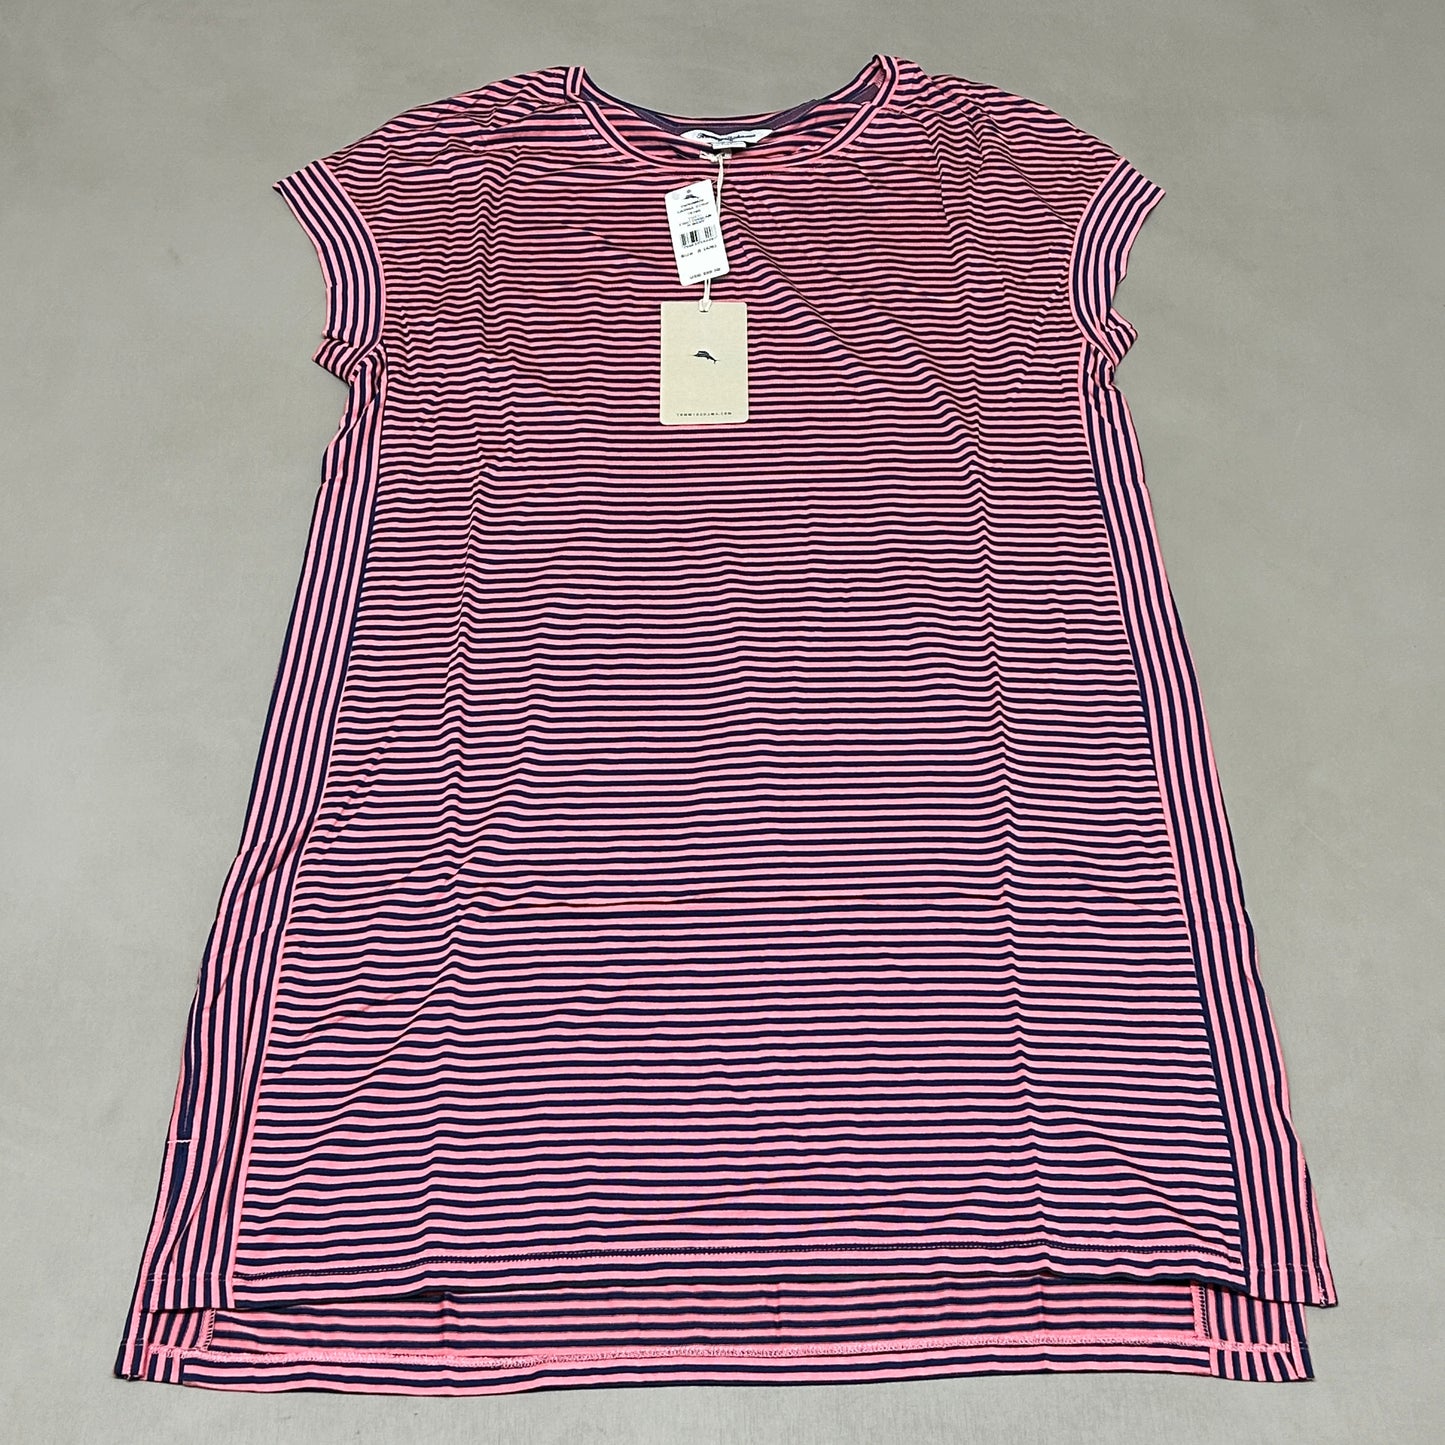 TOMMY BAHAMA Women's Short Sleeve Cassia Stripe T-shirt Dress Tutti Frutti Size S (New)